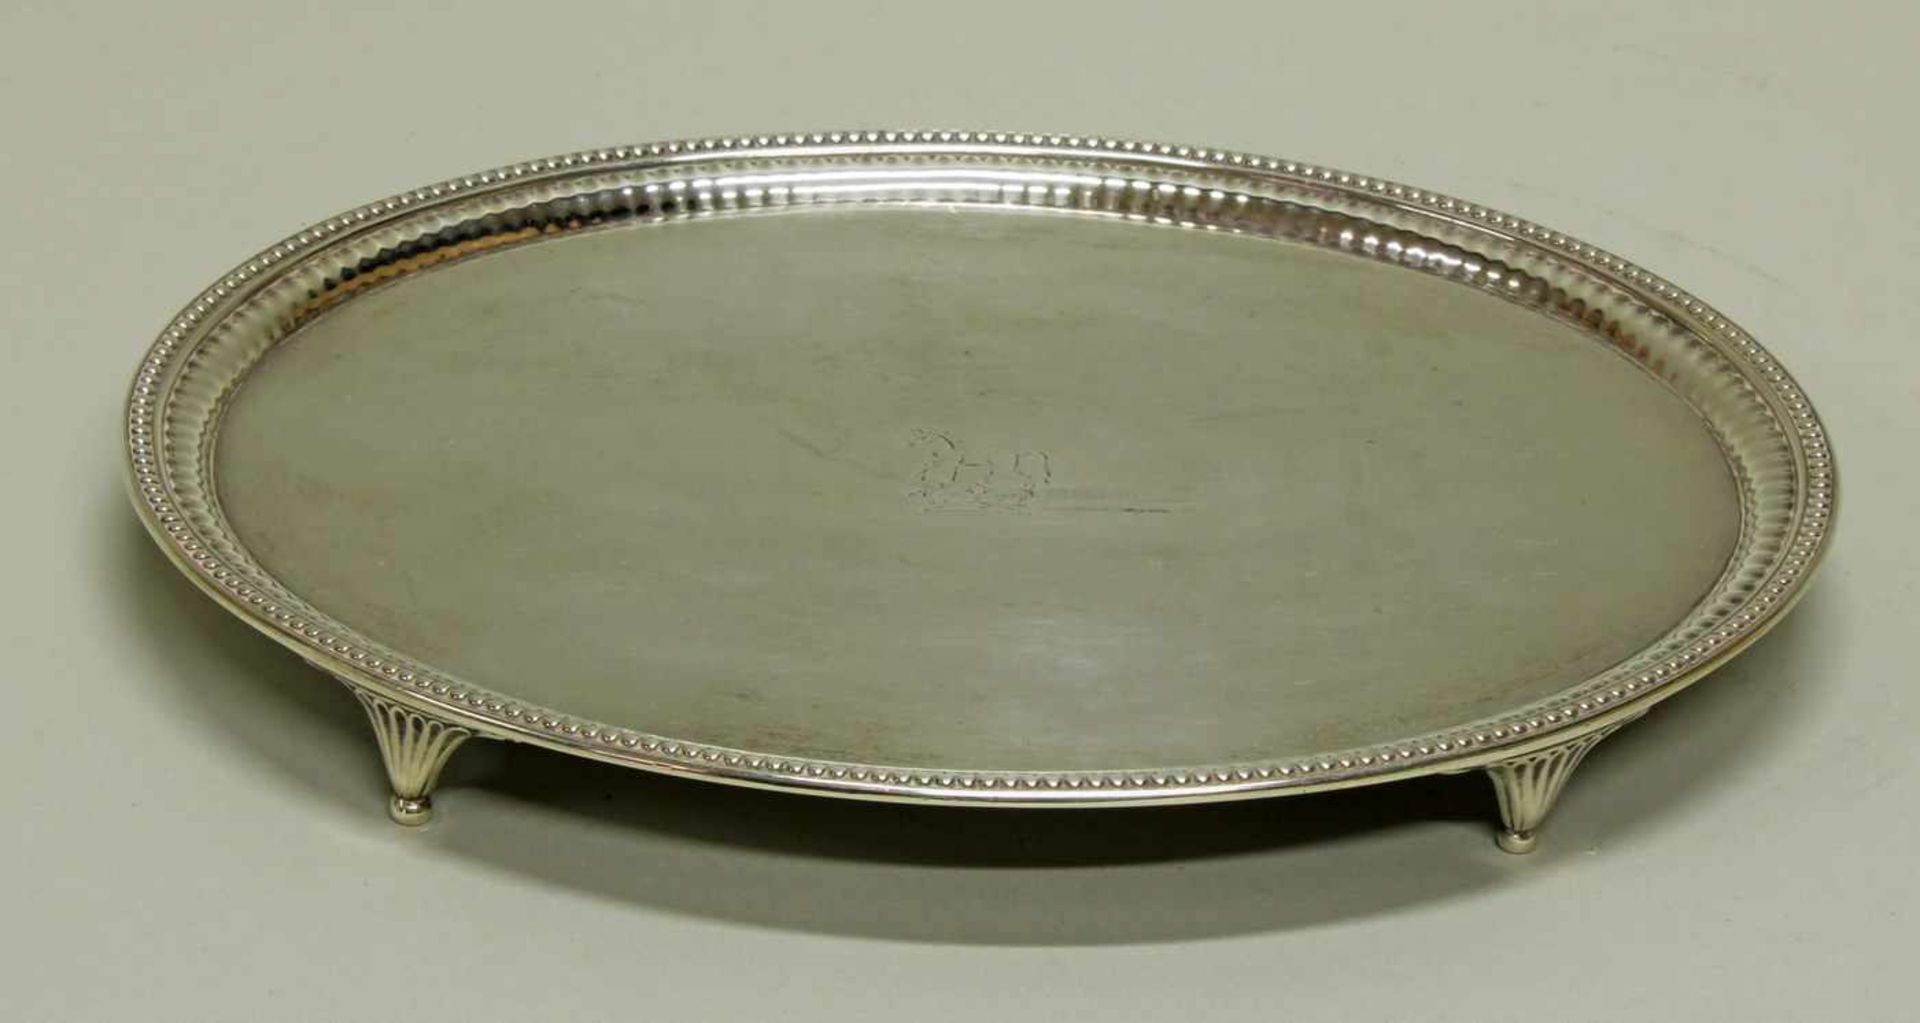 Salver, Silber 925, London, 1783, John Wakelin & William Taylor, oval, glatter Spiegel mit Emblem,